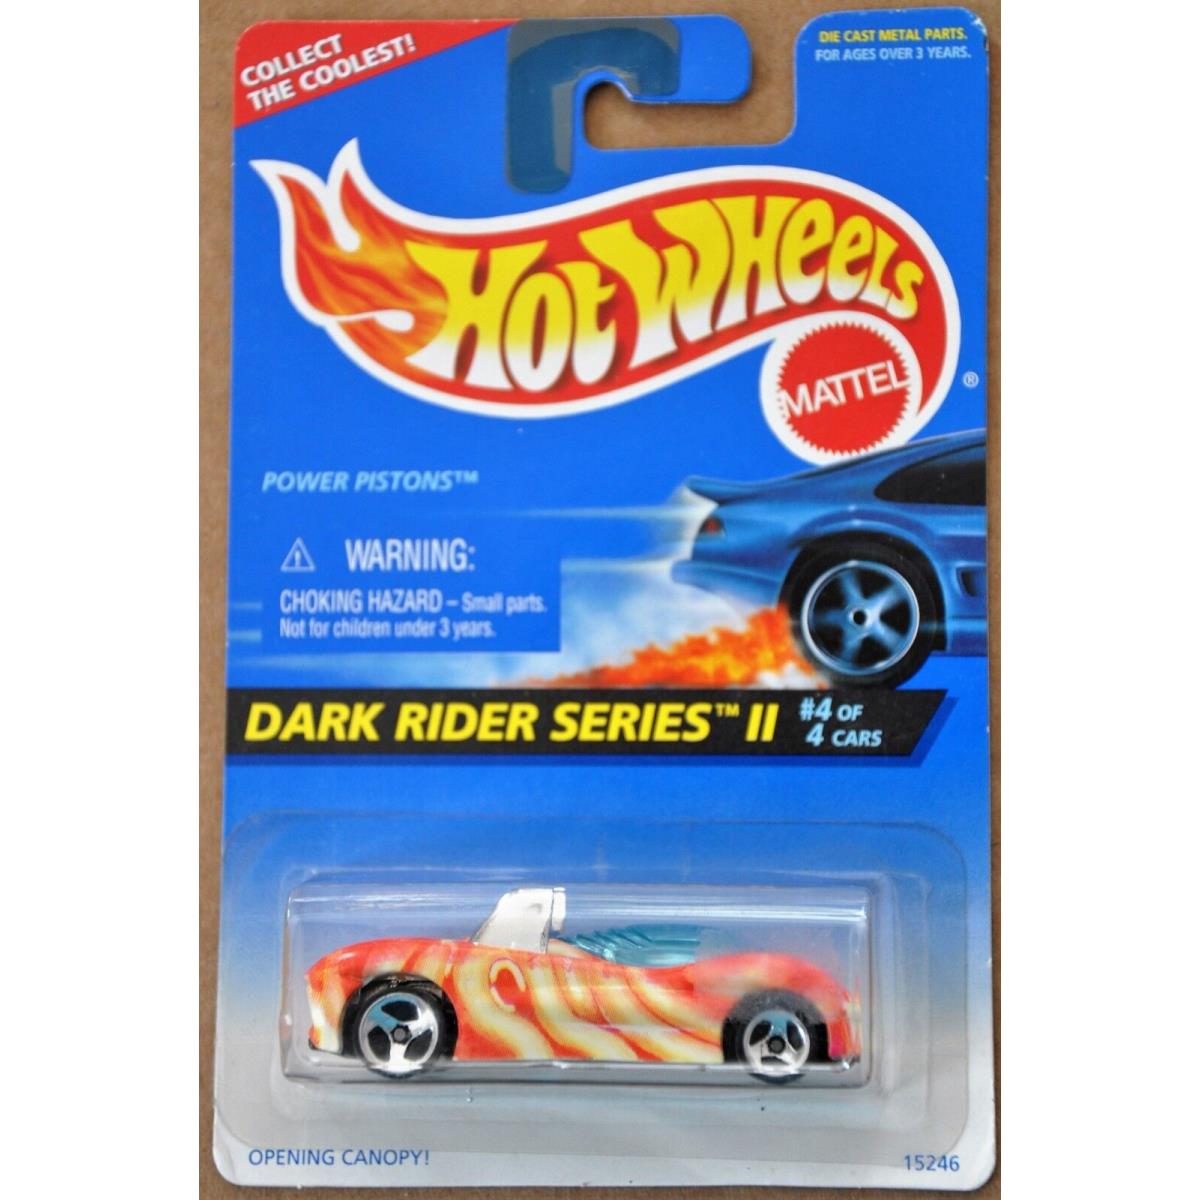 1996 Hot Wheels Pasta Pipes Collector 403 Error Wrong Card Dark Rider Series